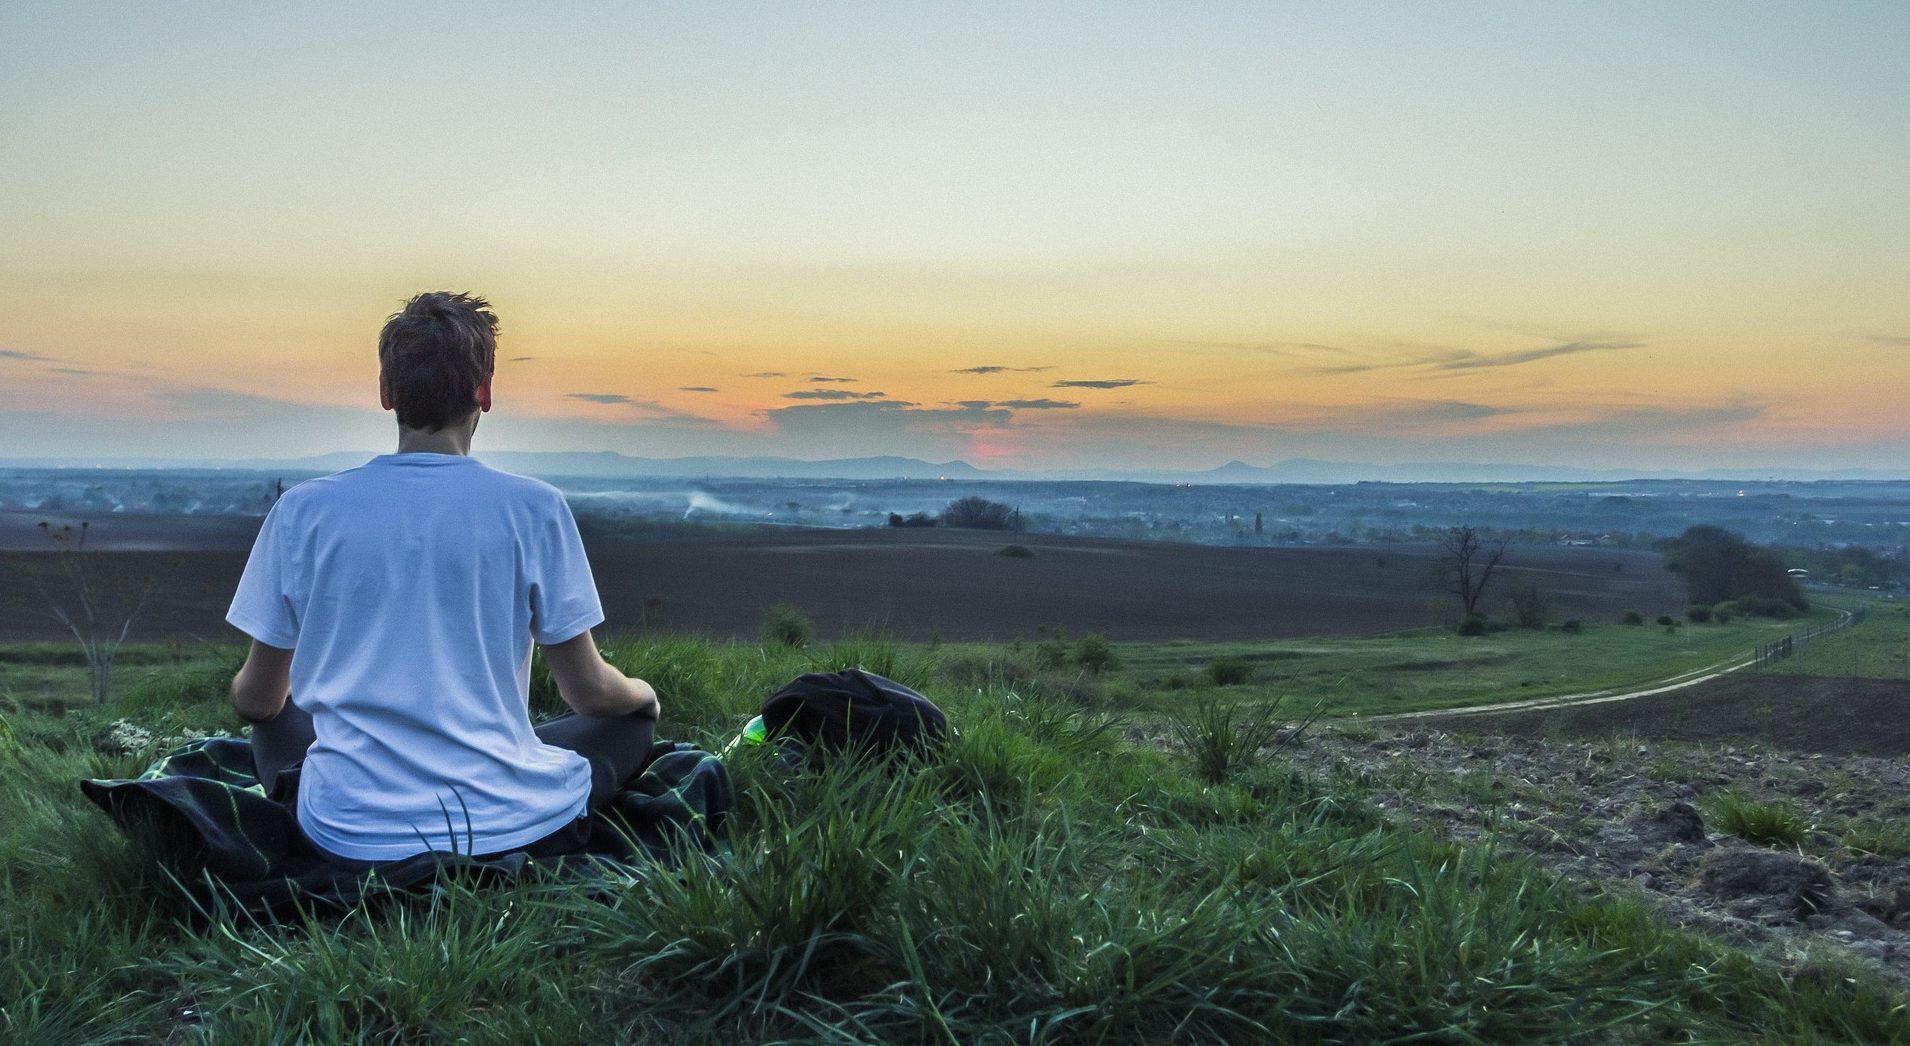 Meditation: Receiving Life with an Open Awareness